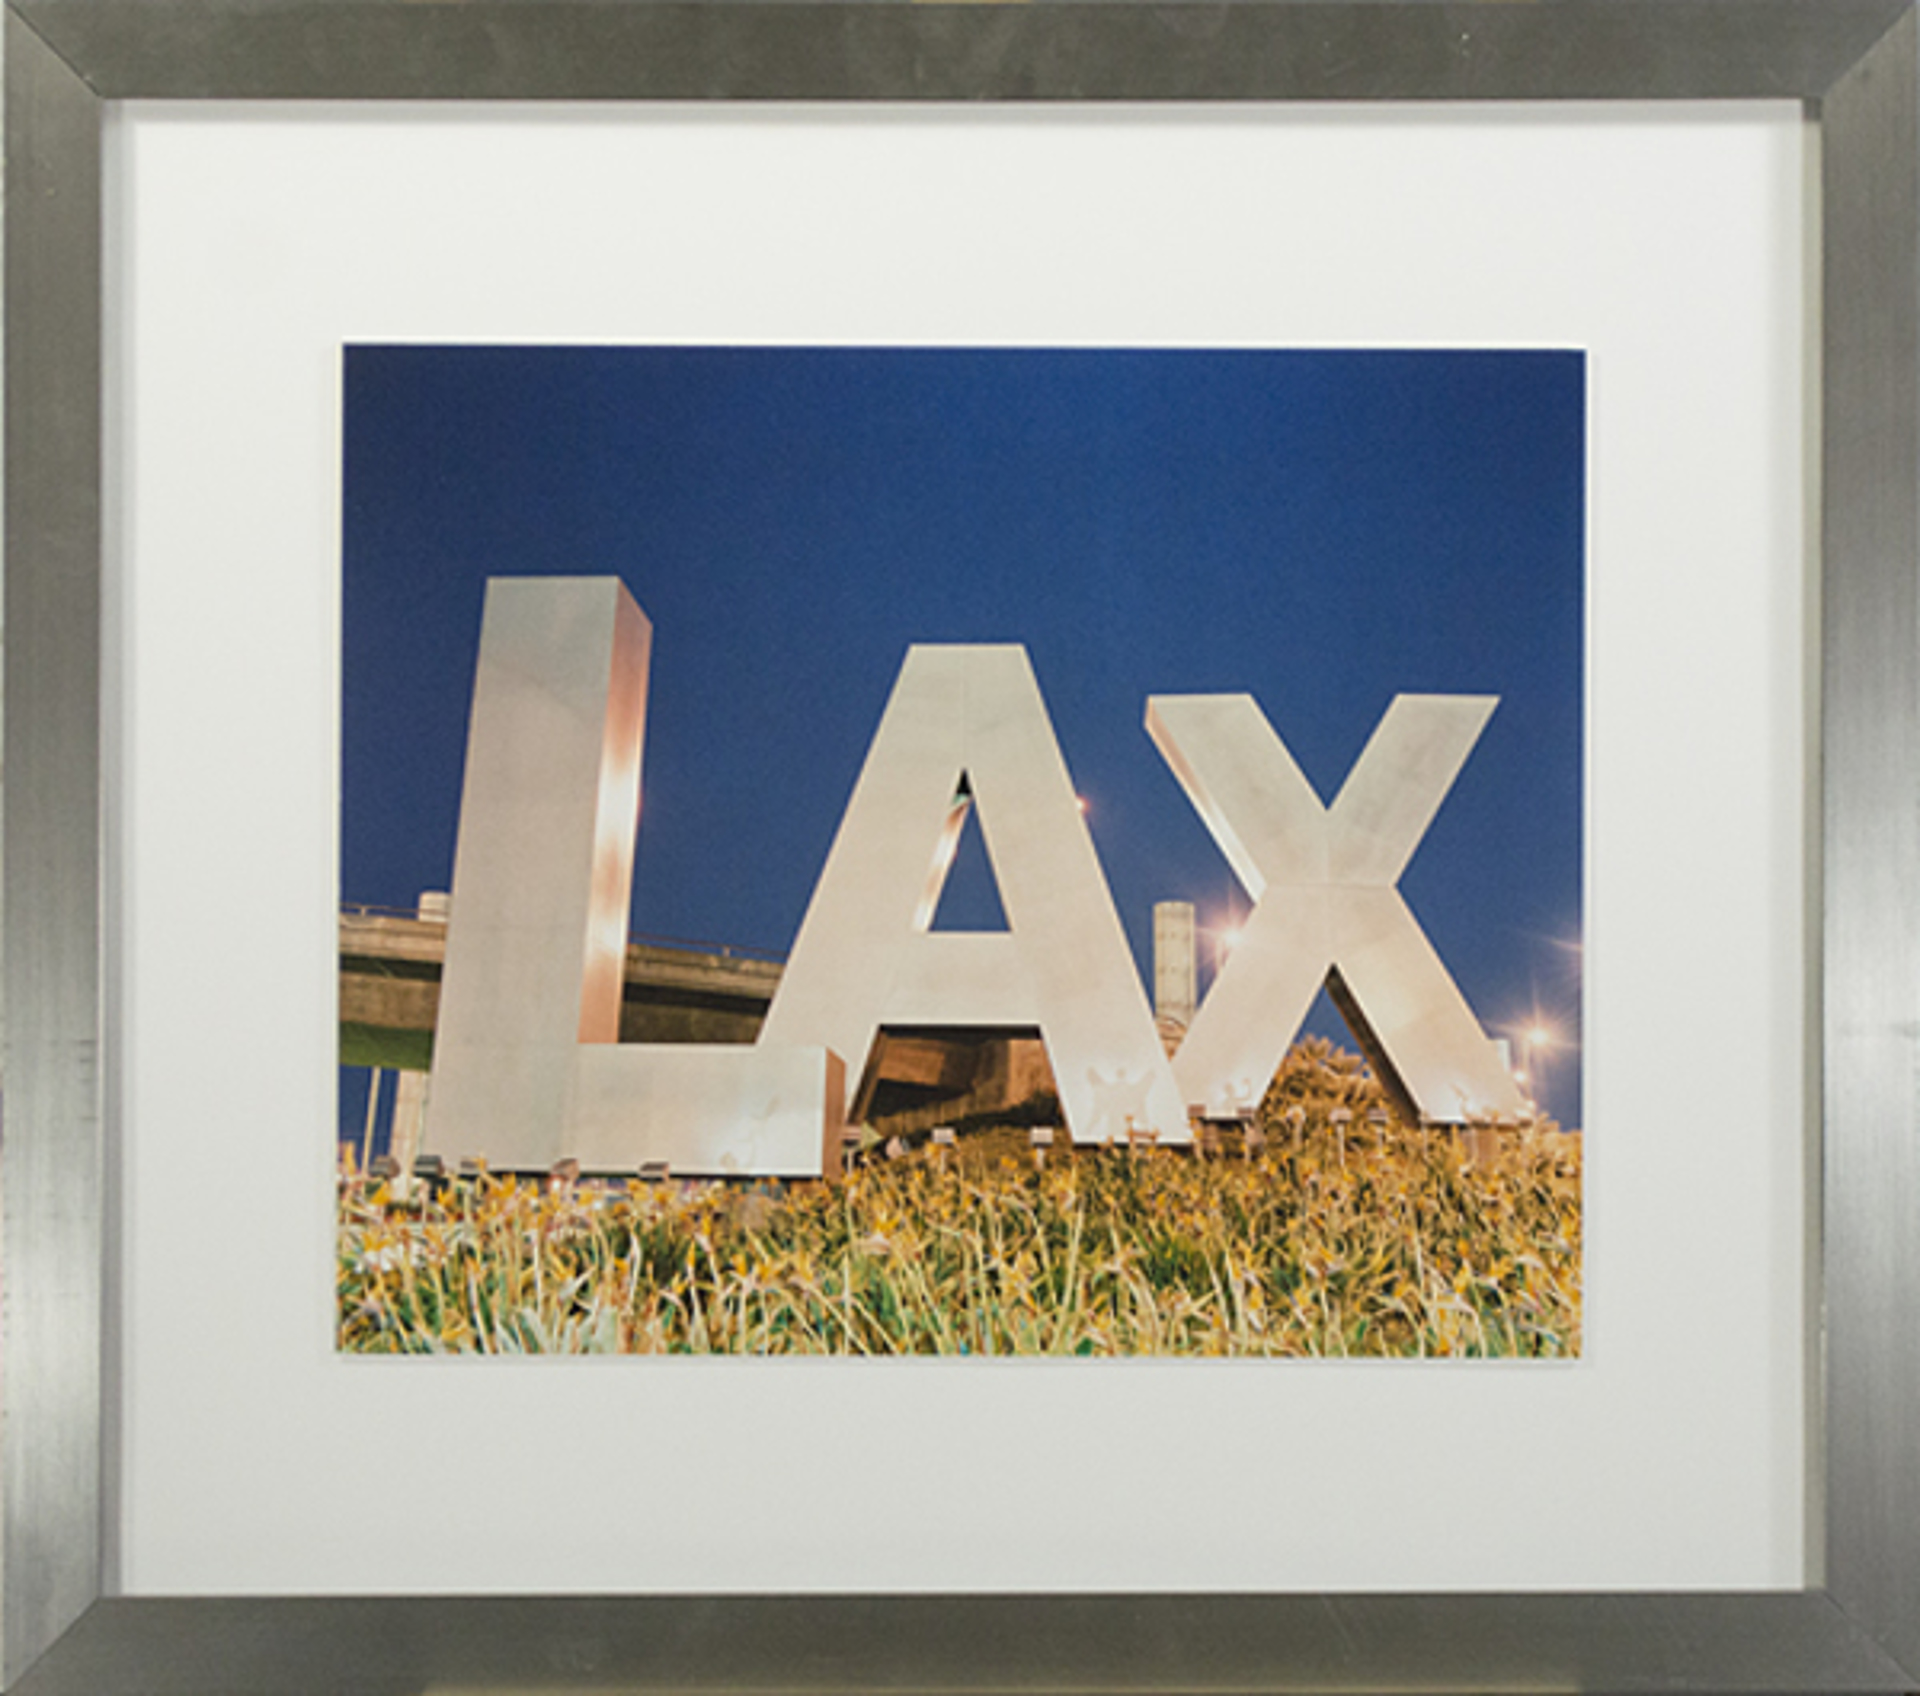 The History of Flight (Upon the LAX Sign) by Robert Kawika Sheer